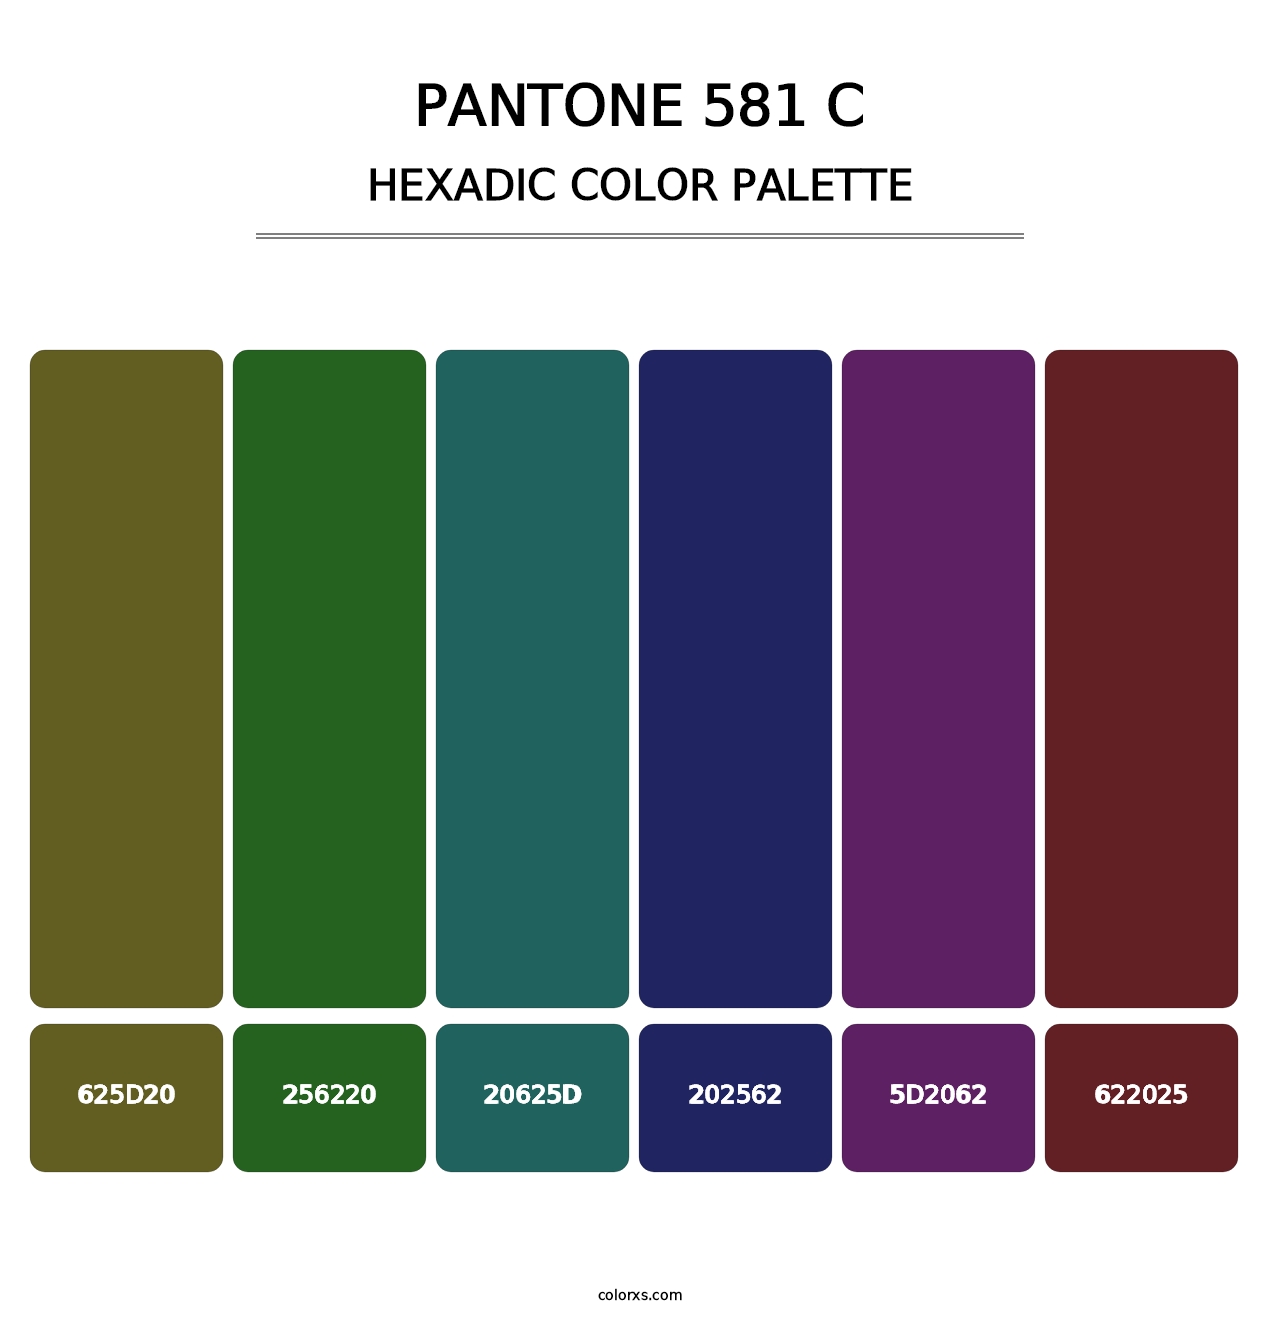 PANTONE 581 C - Hexadic Color Palette